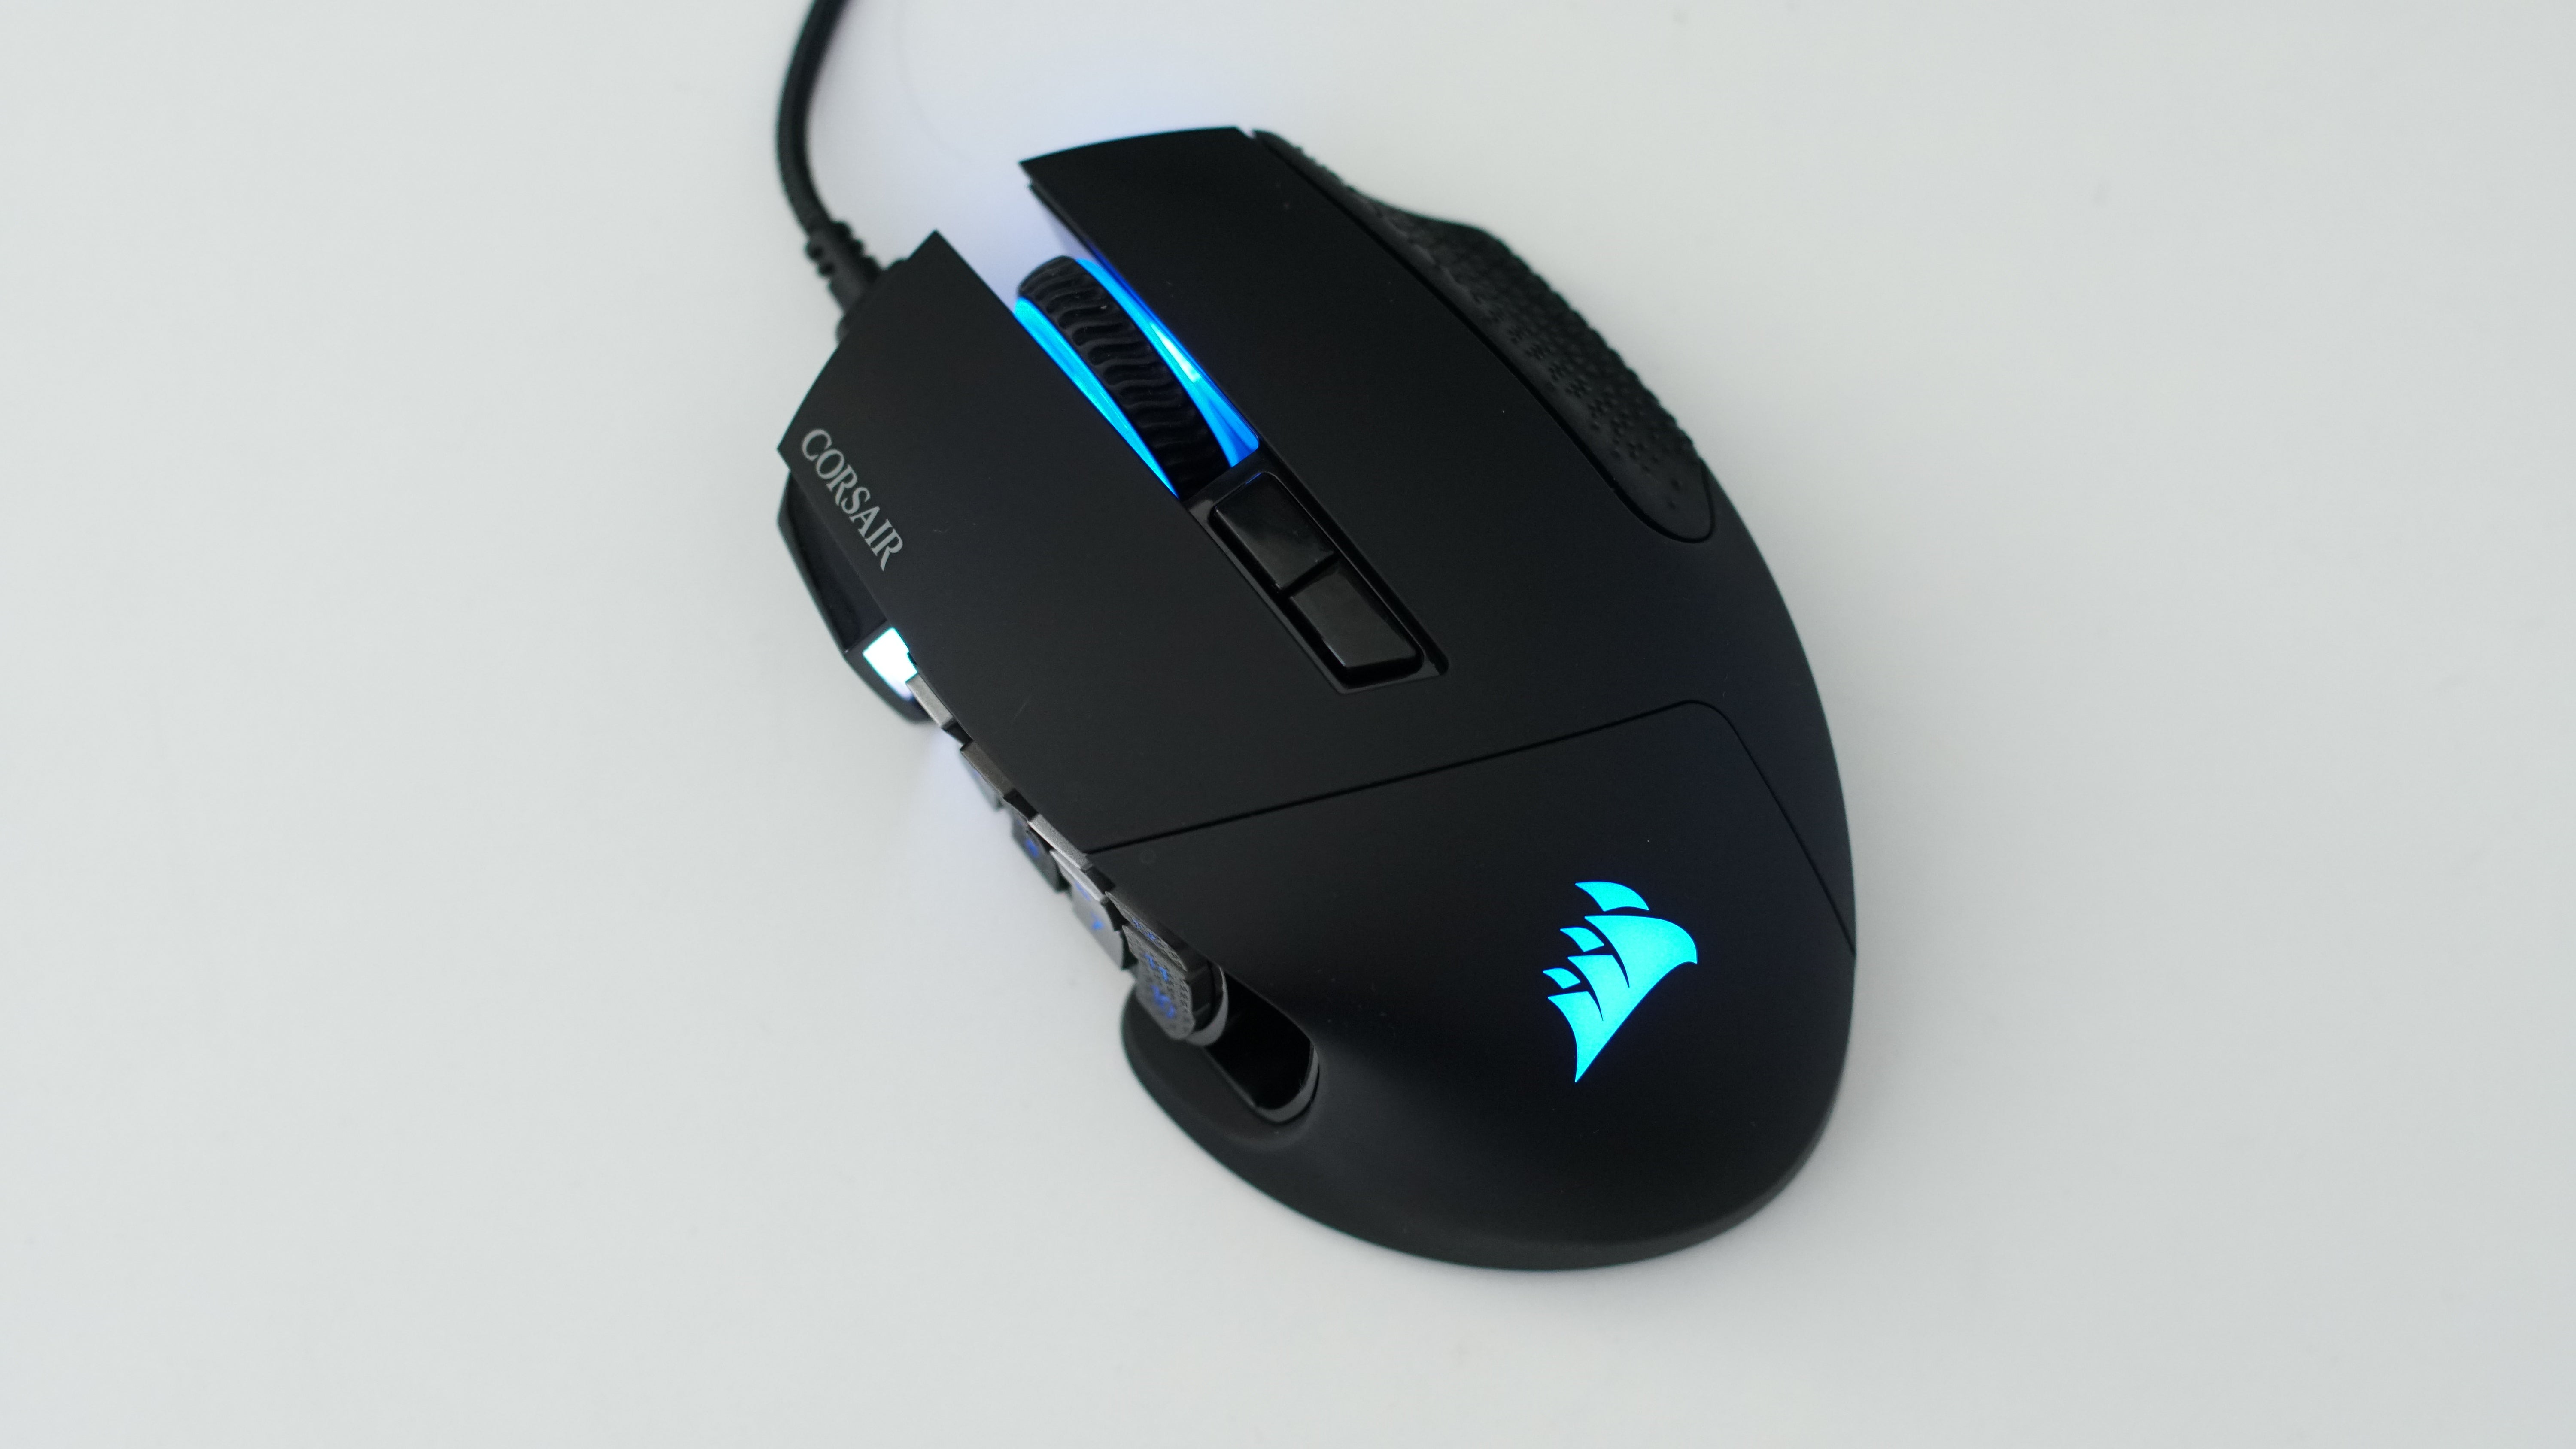 Corsair Scimitar Pro RGB gaming mouse on white background.